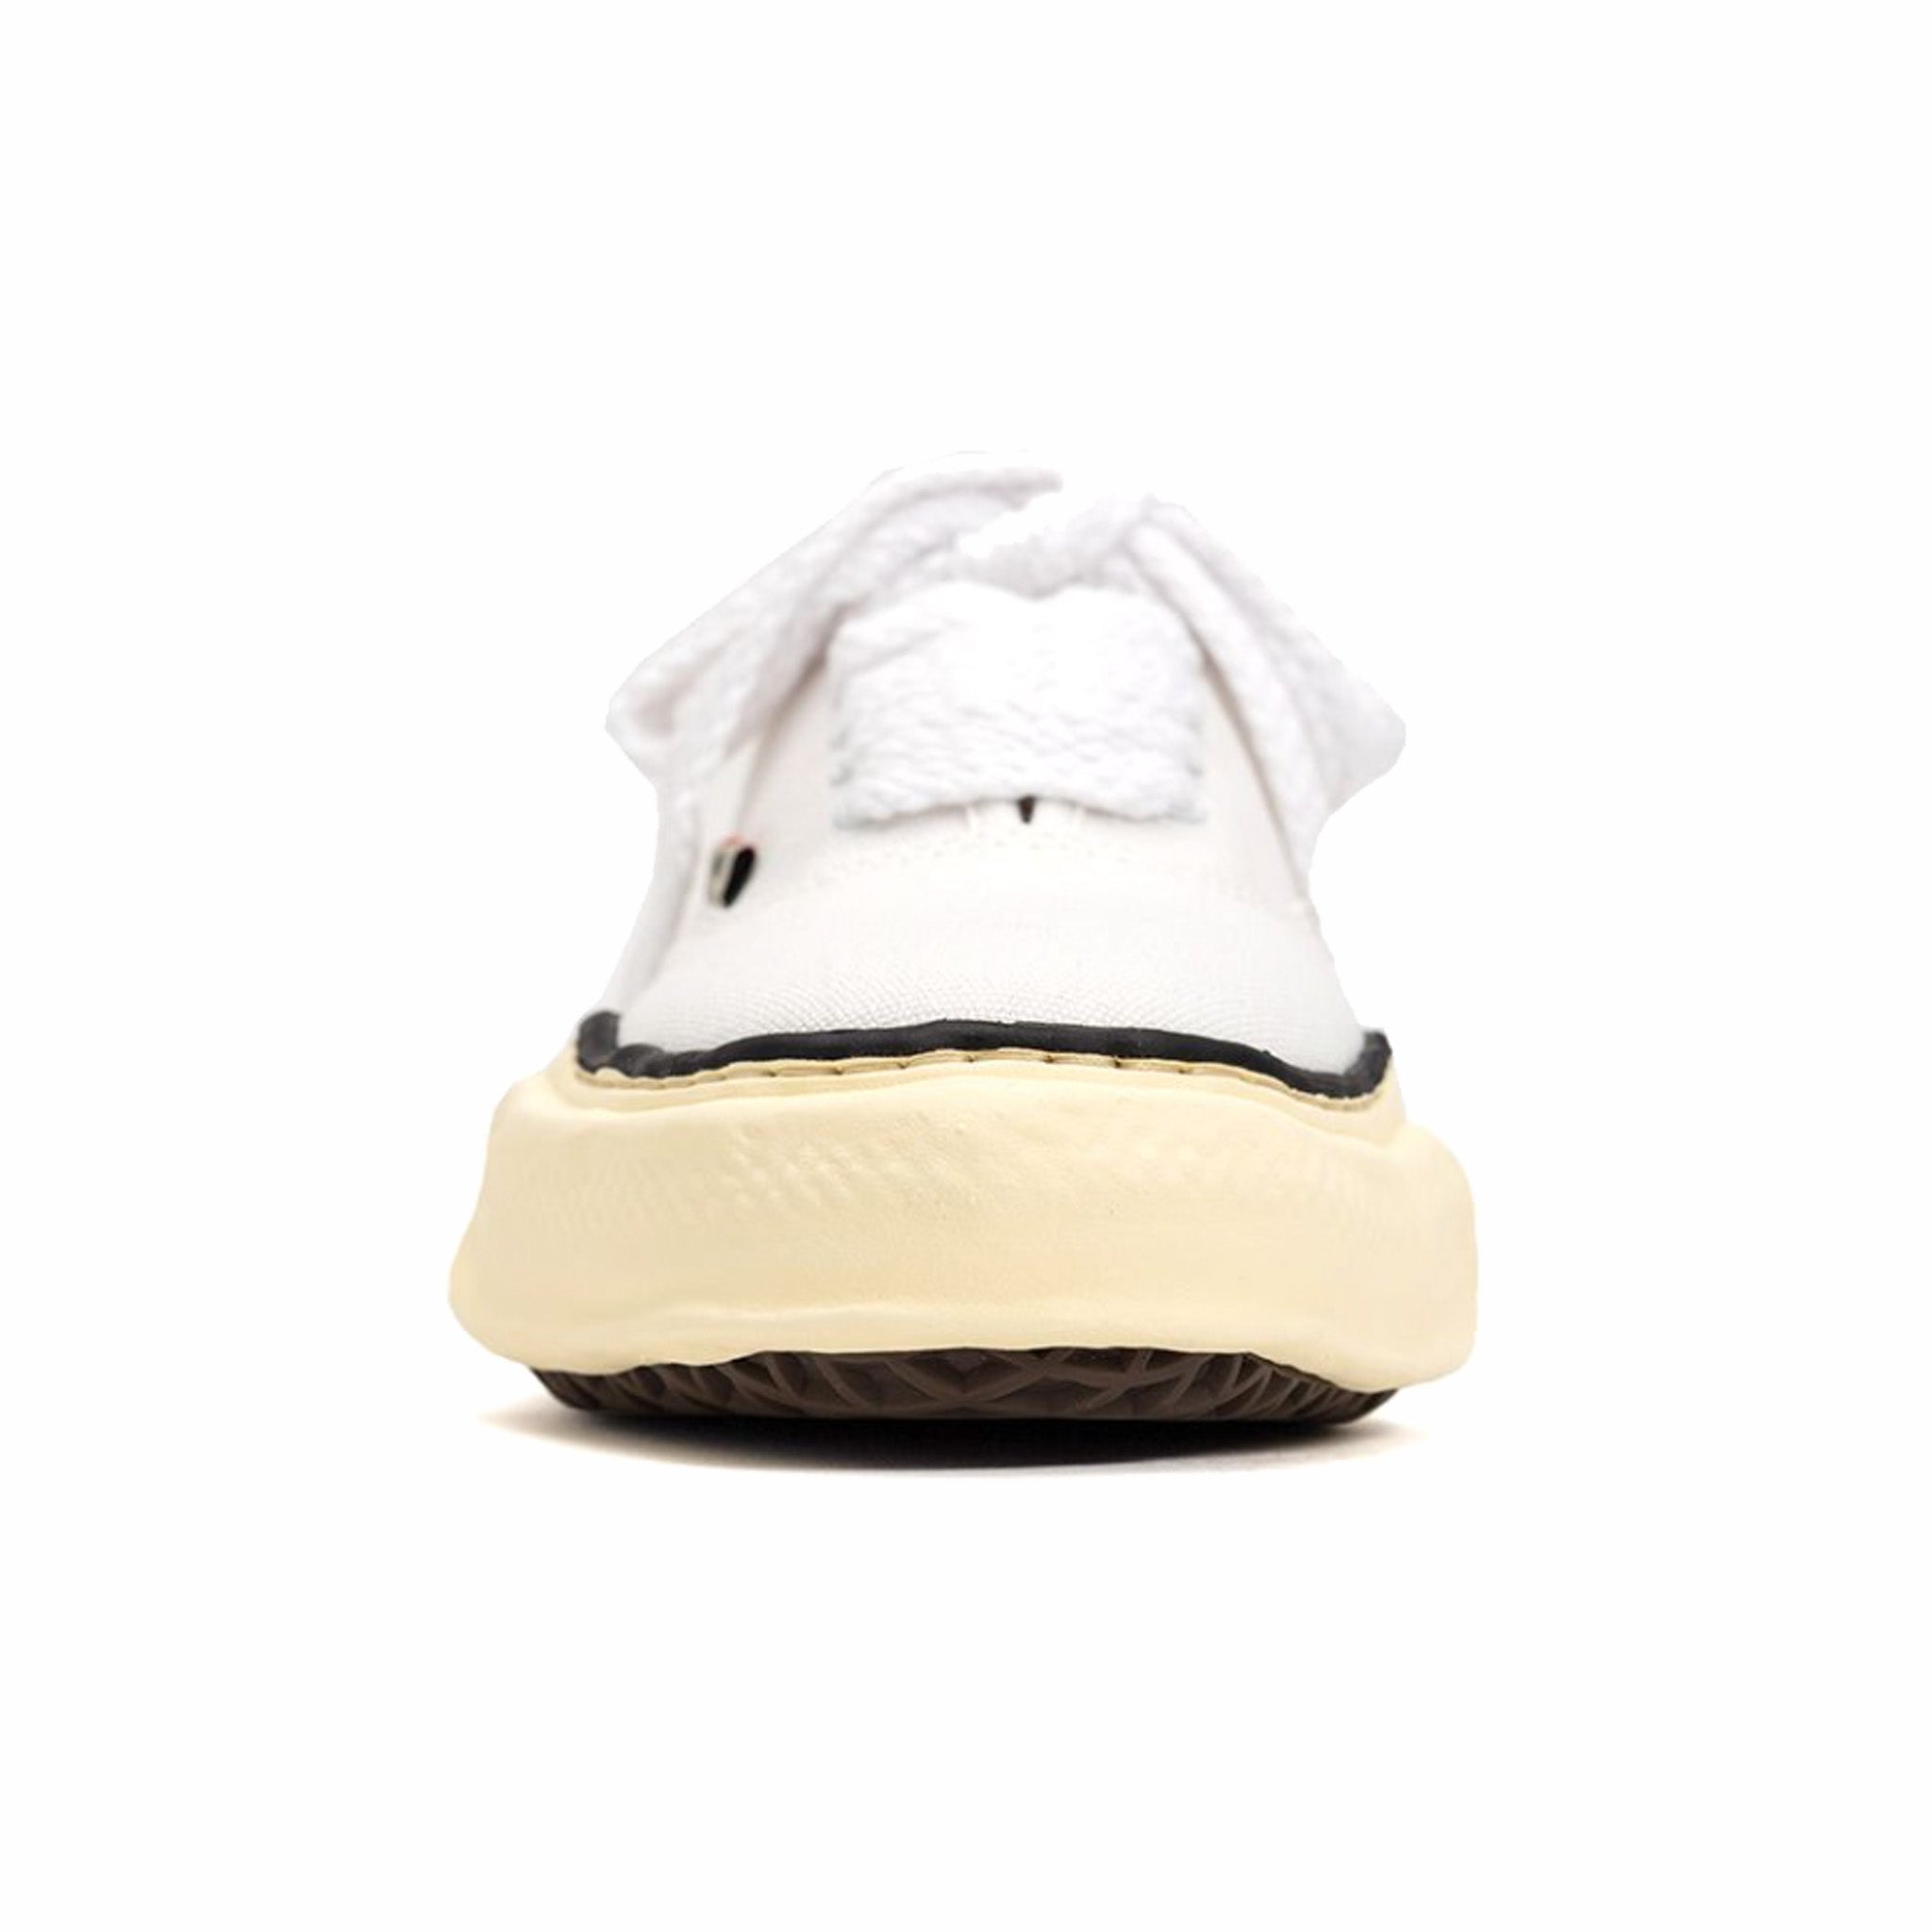 Maison MIHARA YASUHIRO &quot;BAKER&quot; Vintage-Like OG Sole Canvas Low-top Sneaker (White) - August Shop